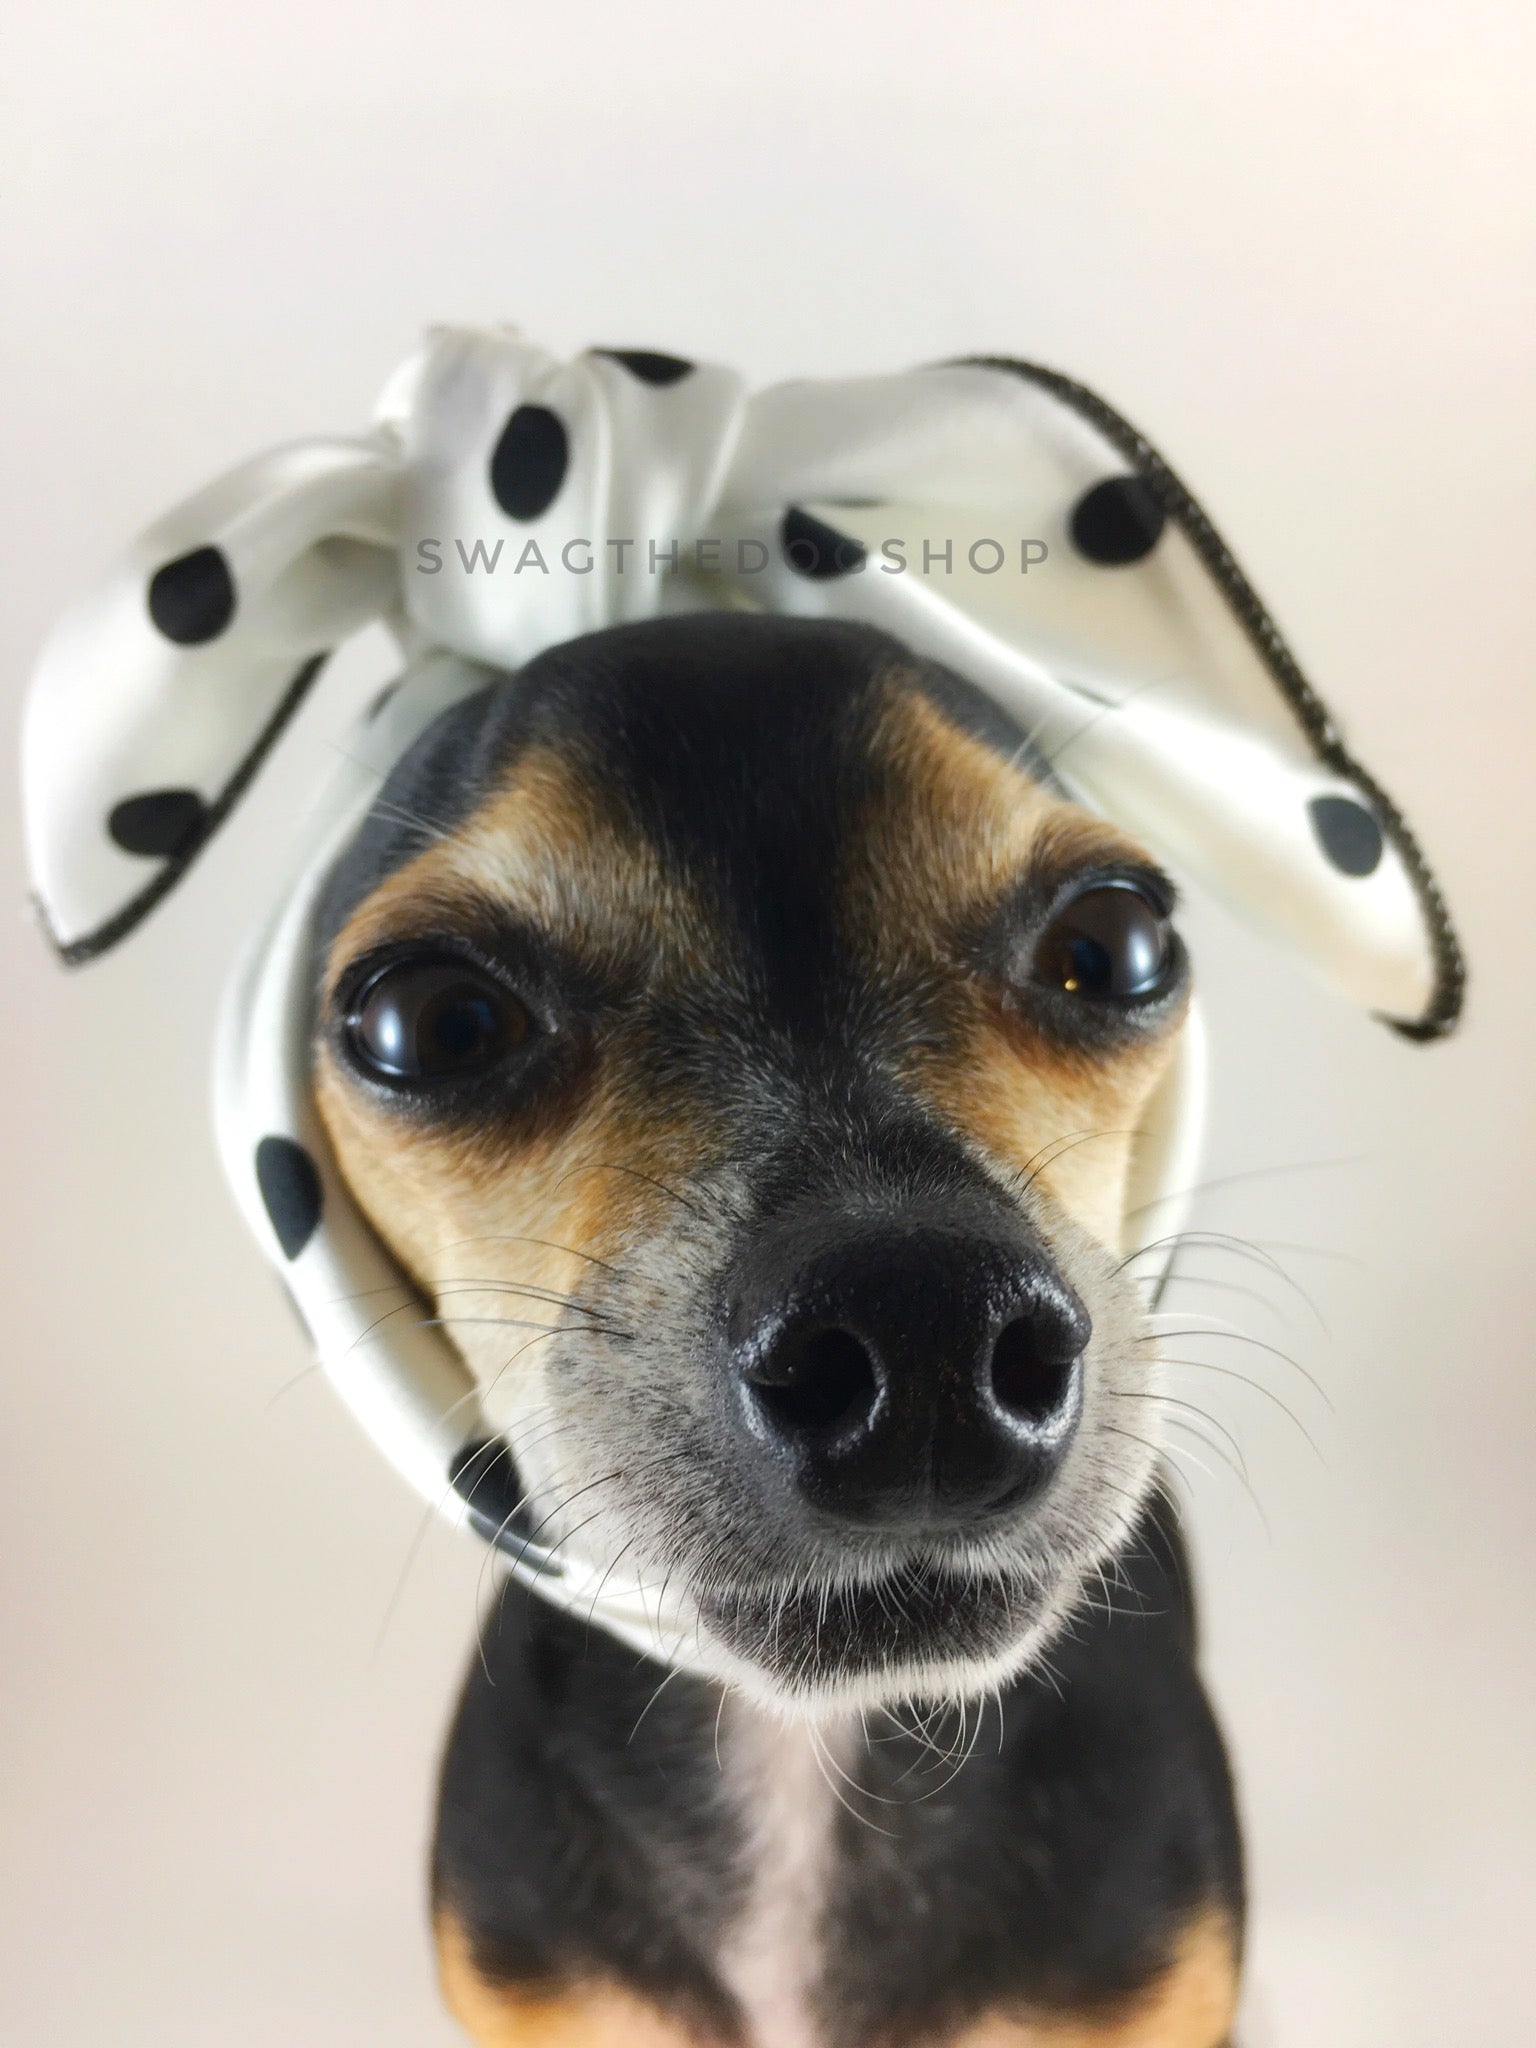 Polka Dot White Swagdana Scarf - Bust of Cute Chihuahua Wearing Swagdana Scarf as Headband. Dog Bandana. Dog Scarf.